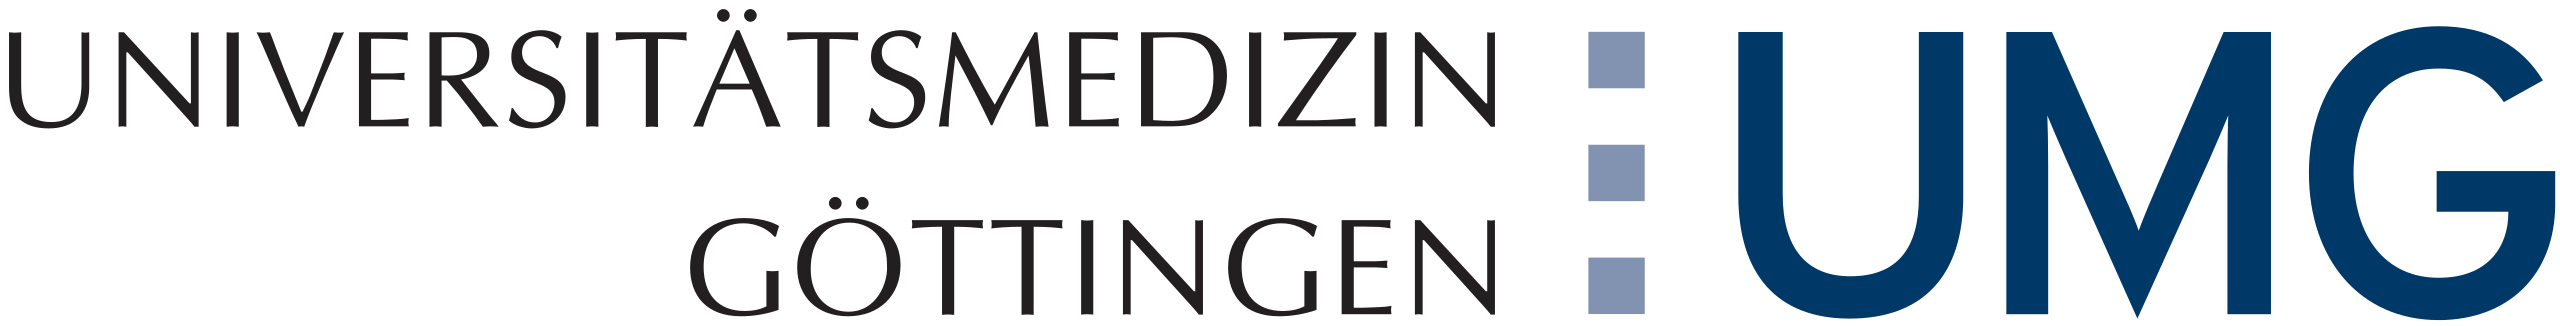 2560px-Universitätsmedizin-Göttingen-Logo.svg